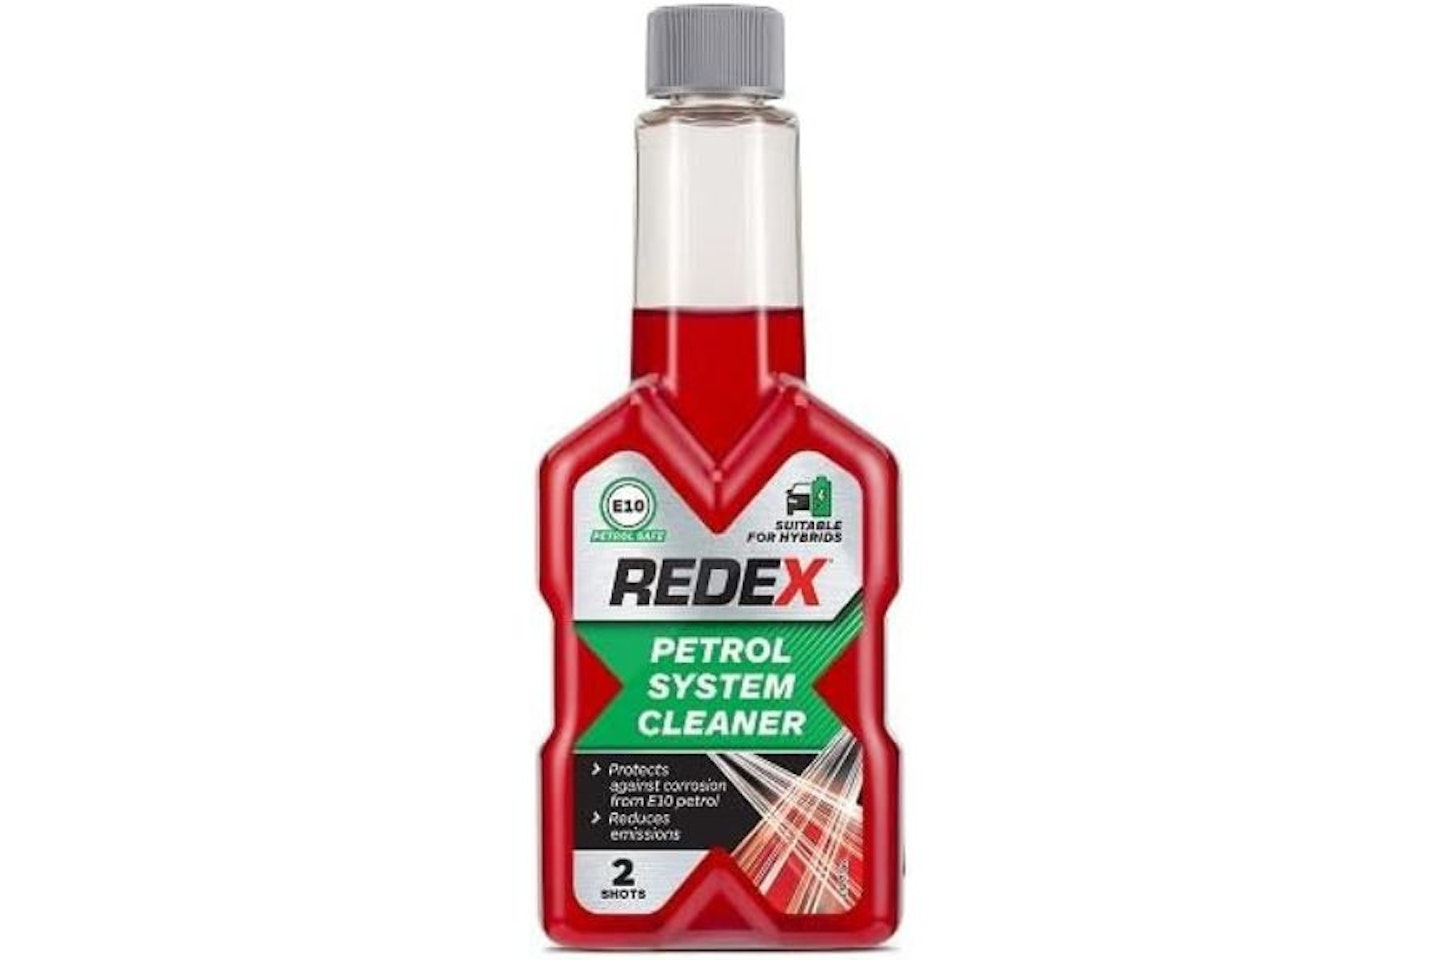 Redex petrol system cleaner